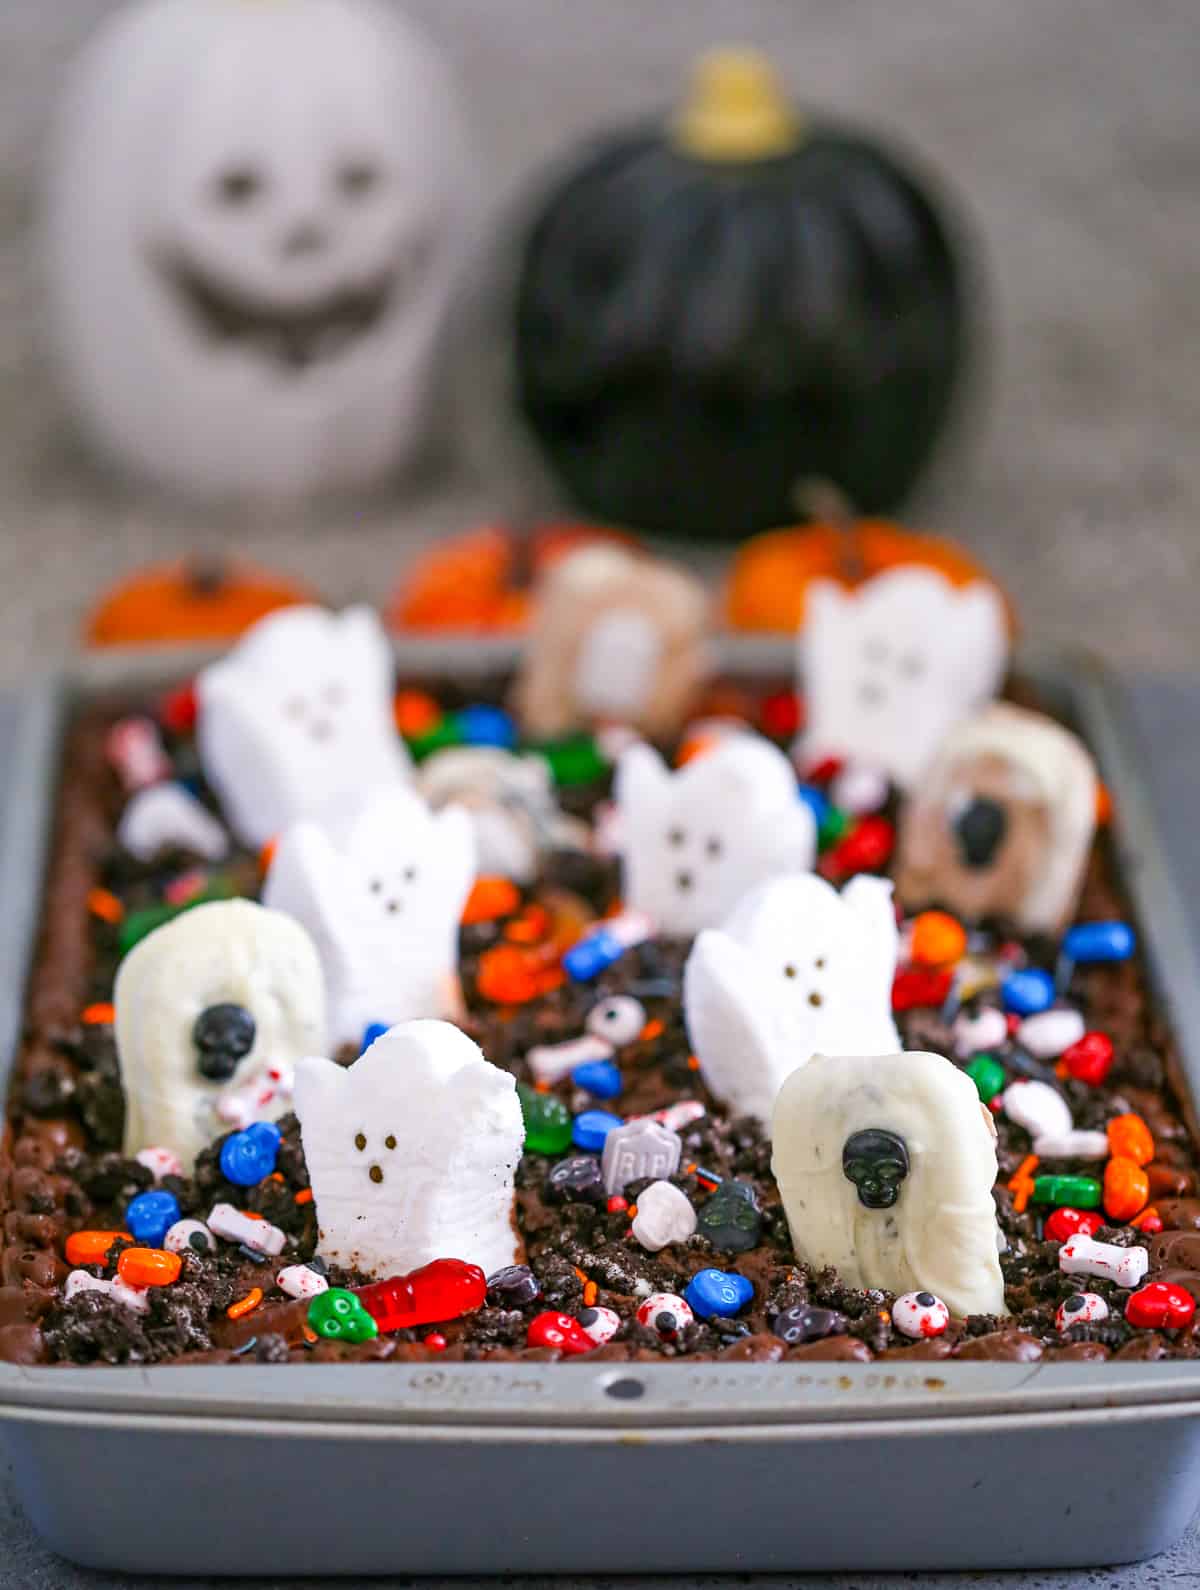 Halloween Graveyard Dirt Cake recipe ghost candy chocolate